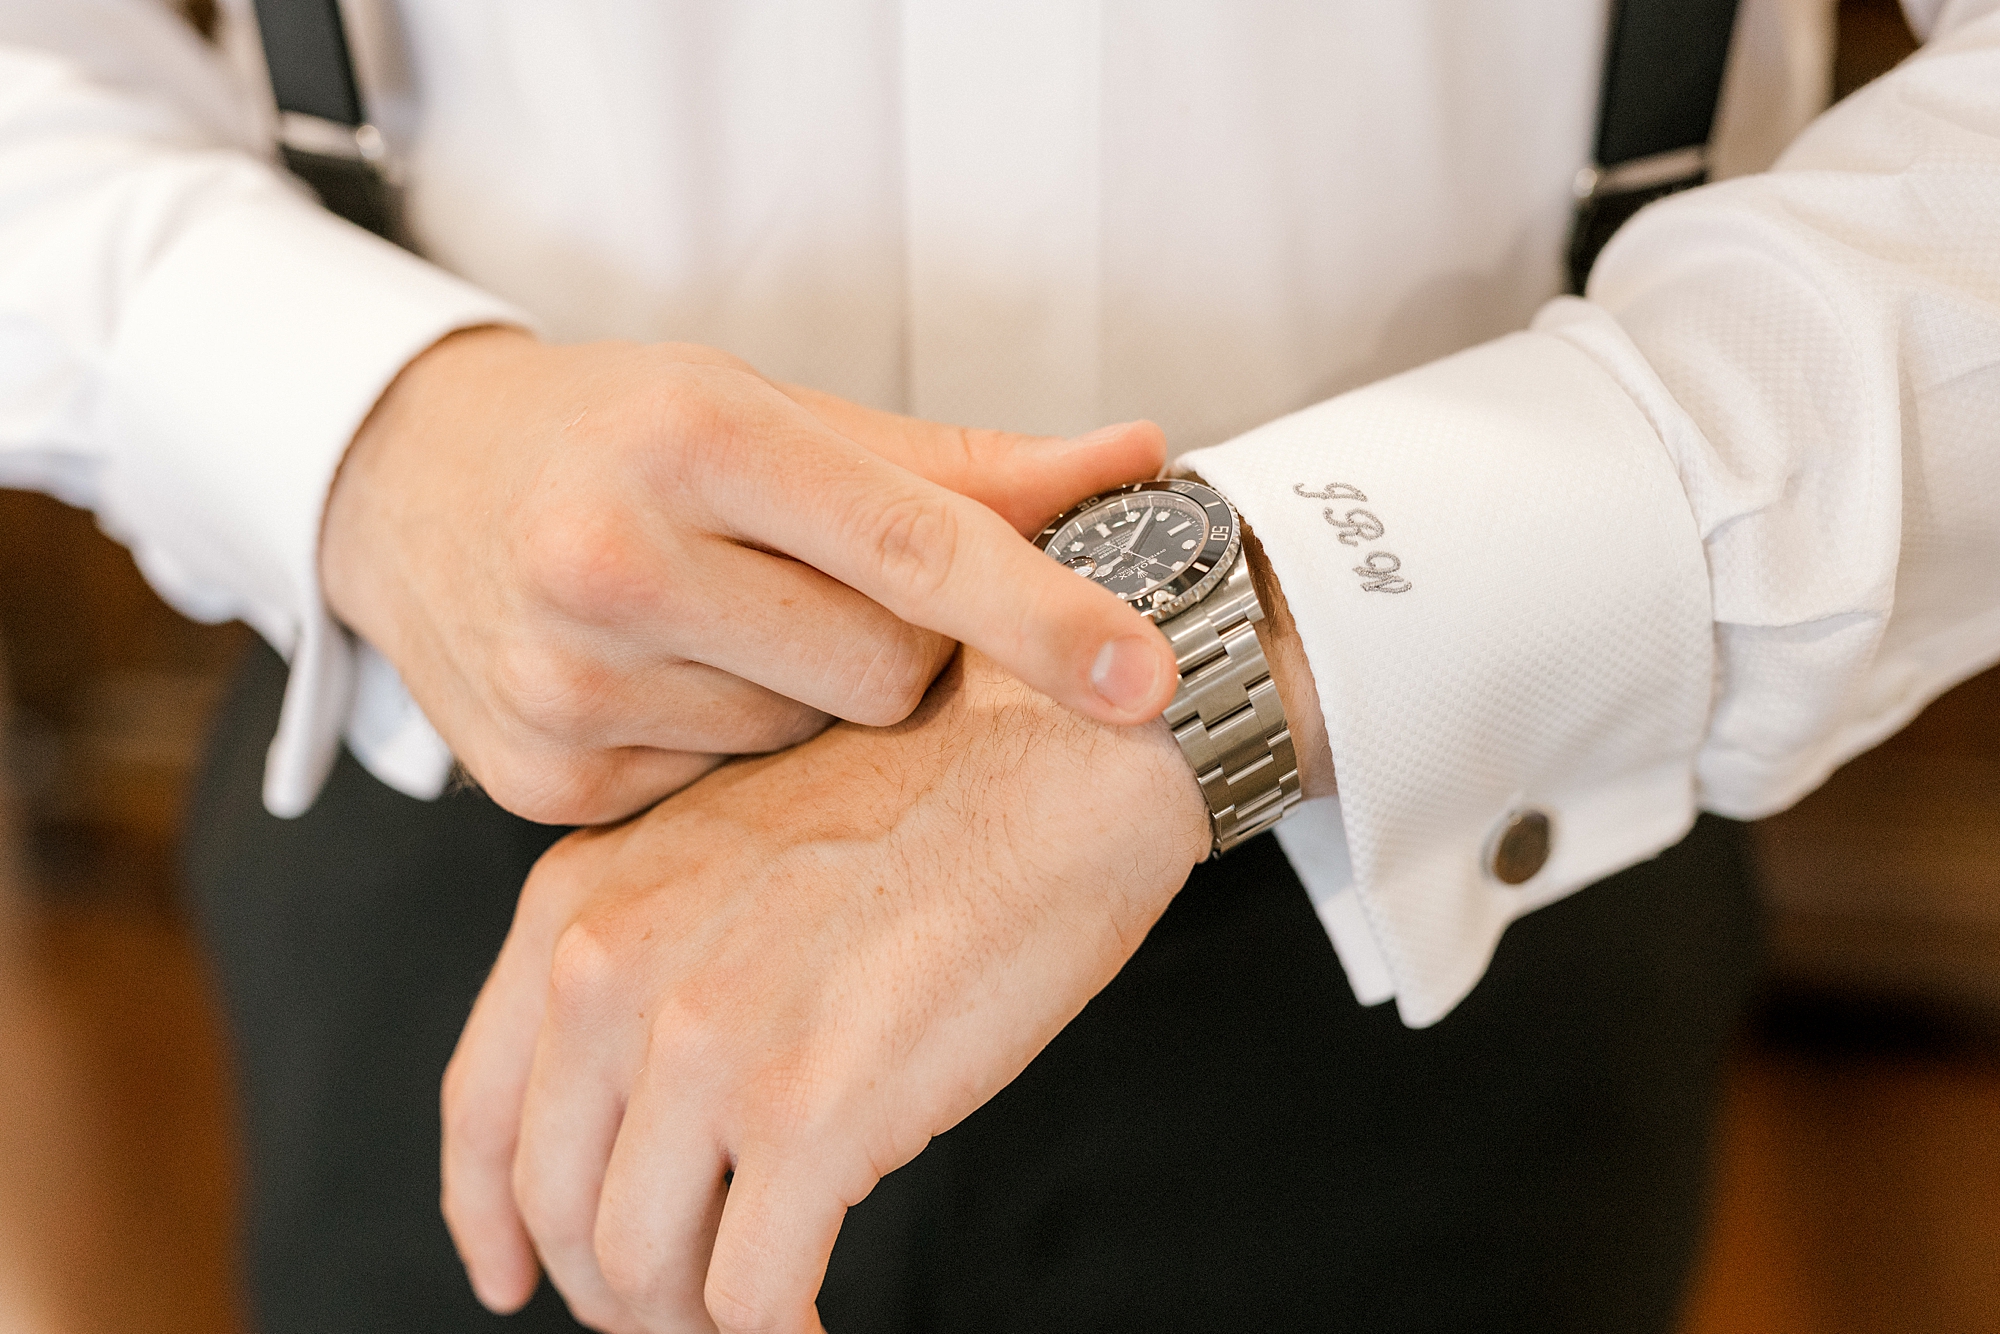 groom adjusts new watch on wrist during NJ wedding day